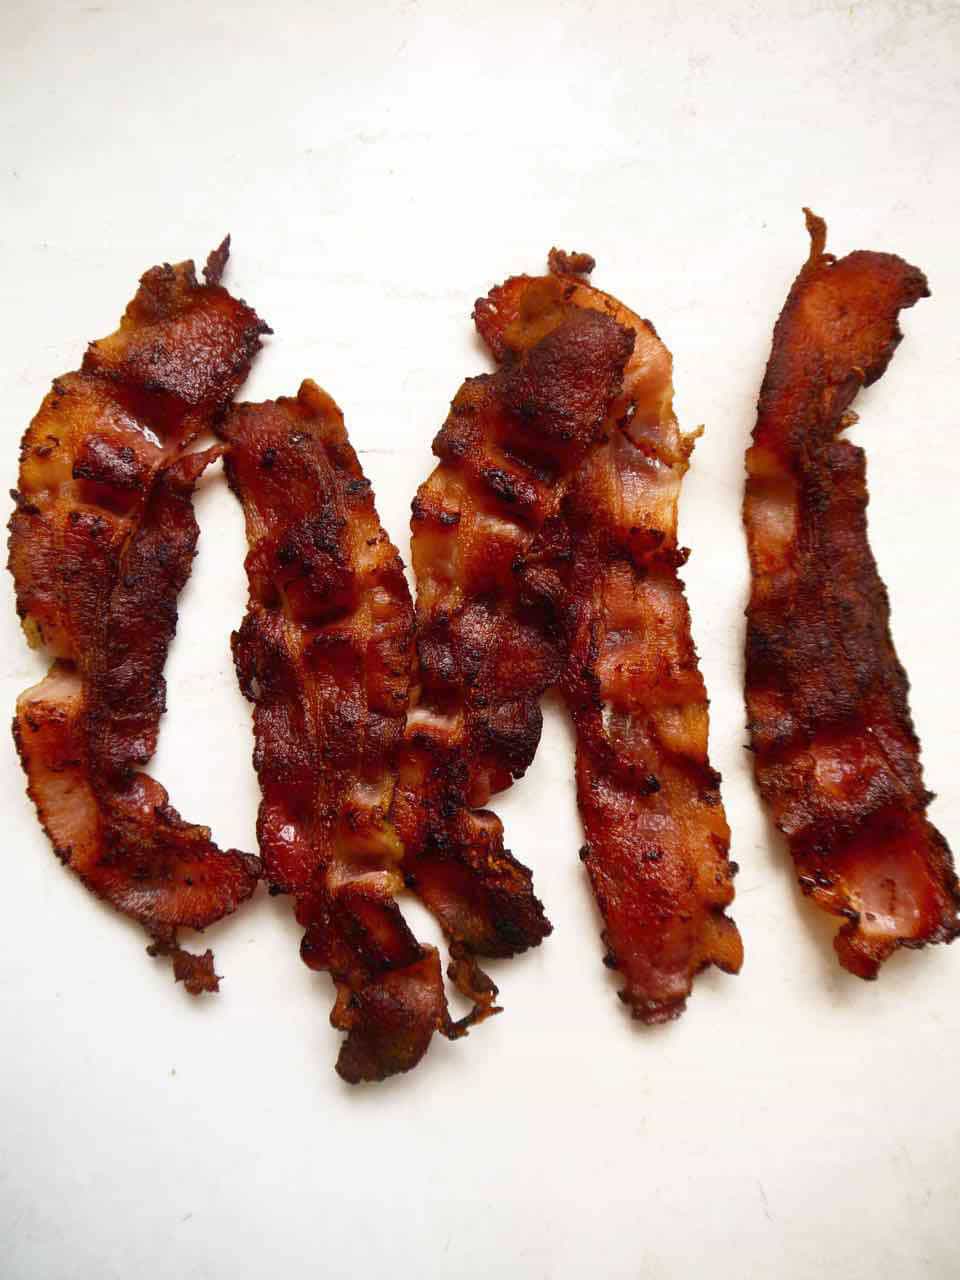 Crispy bacon.